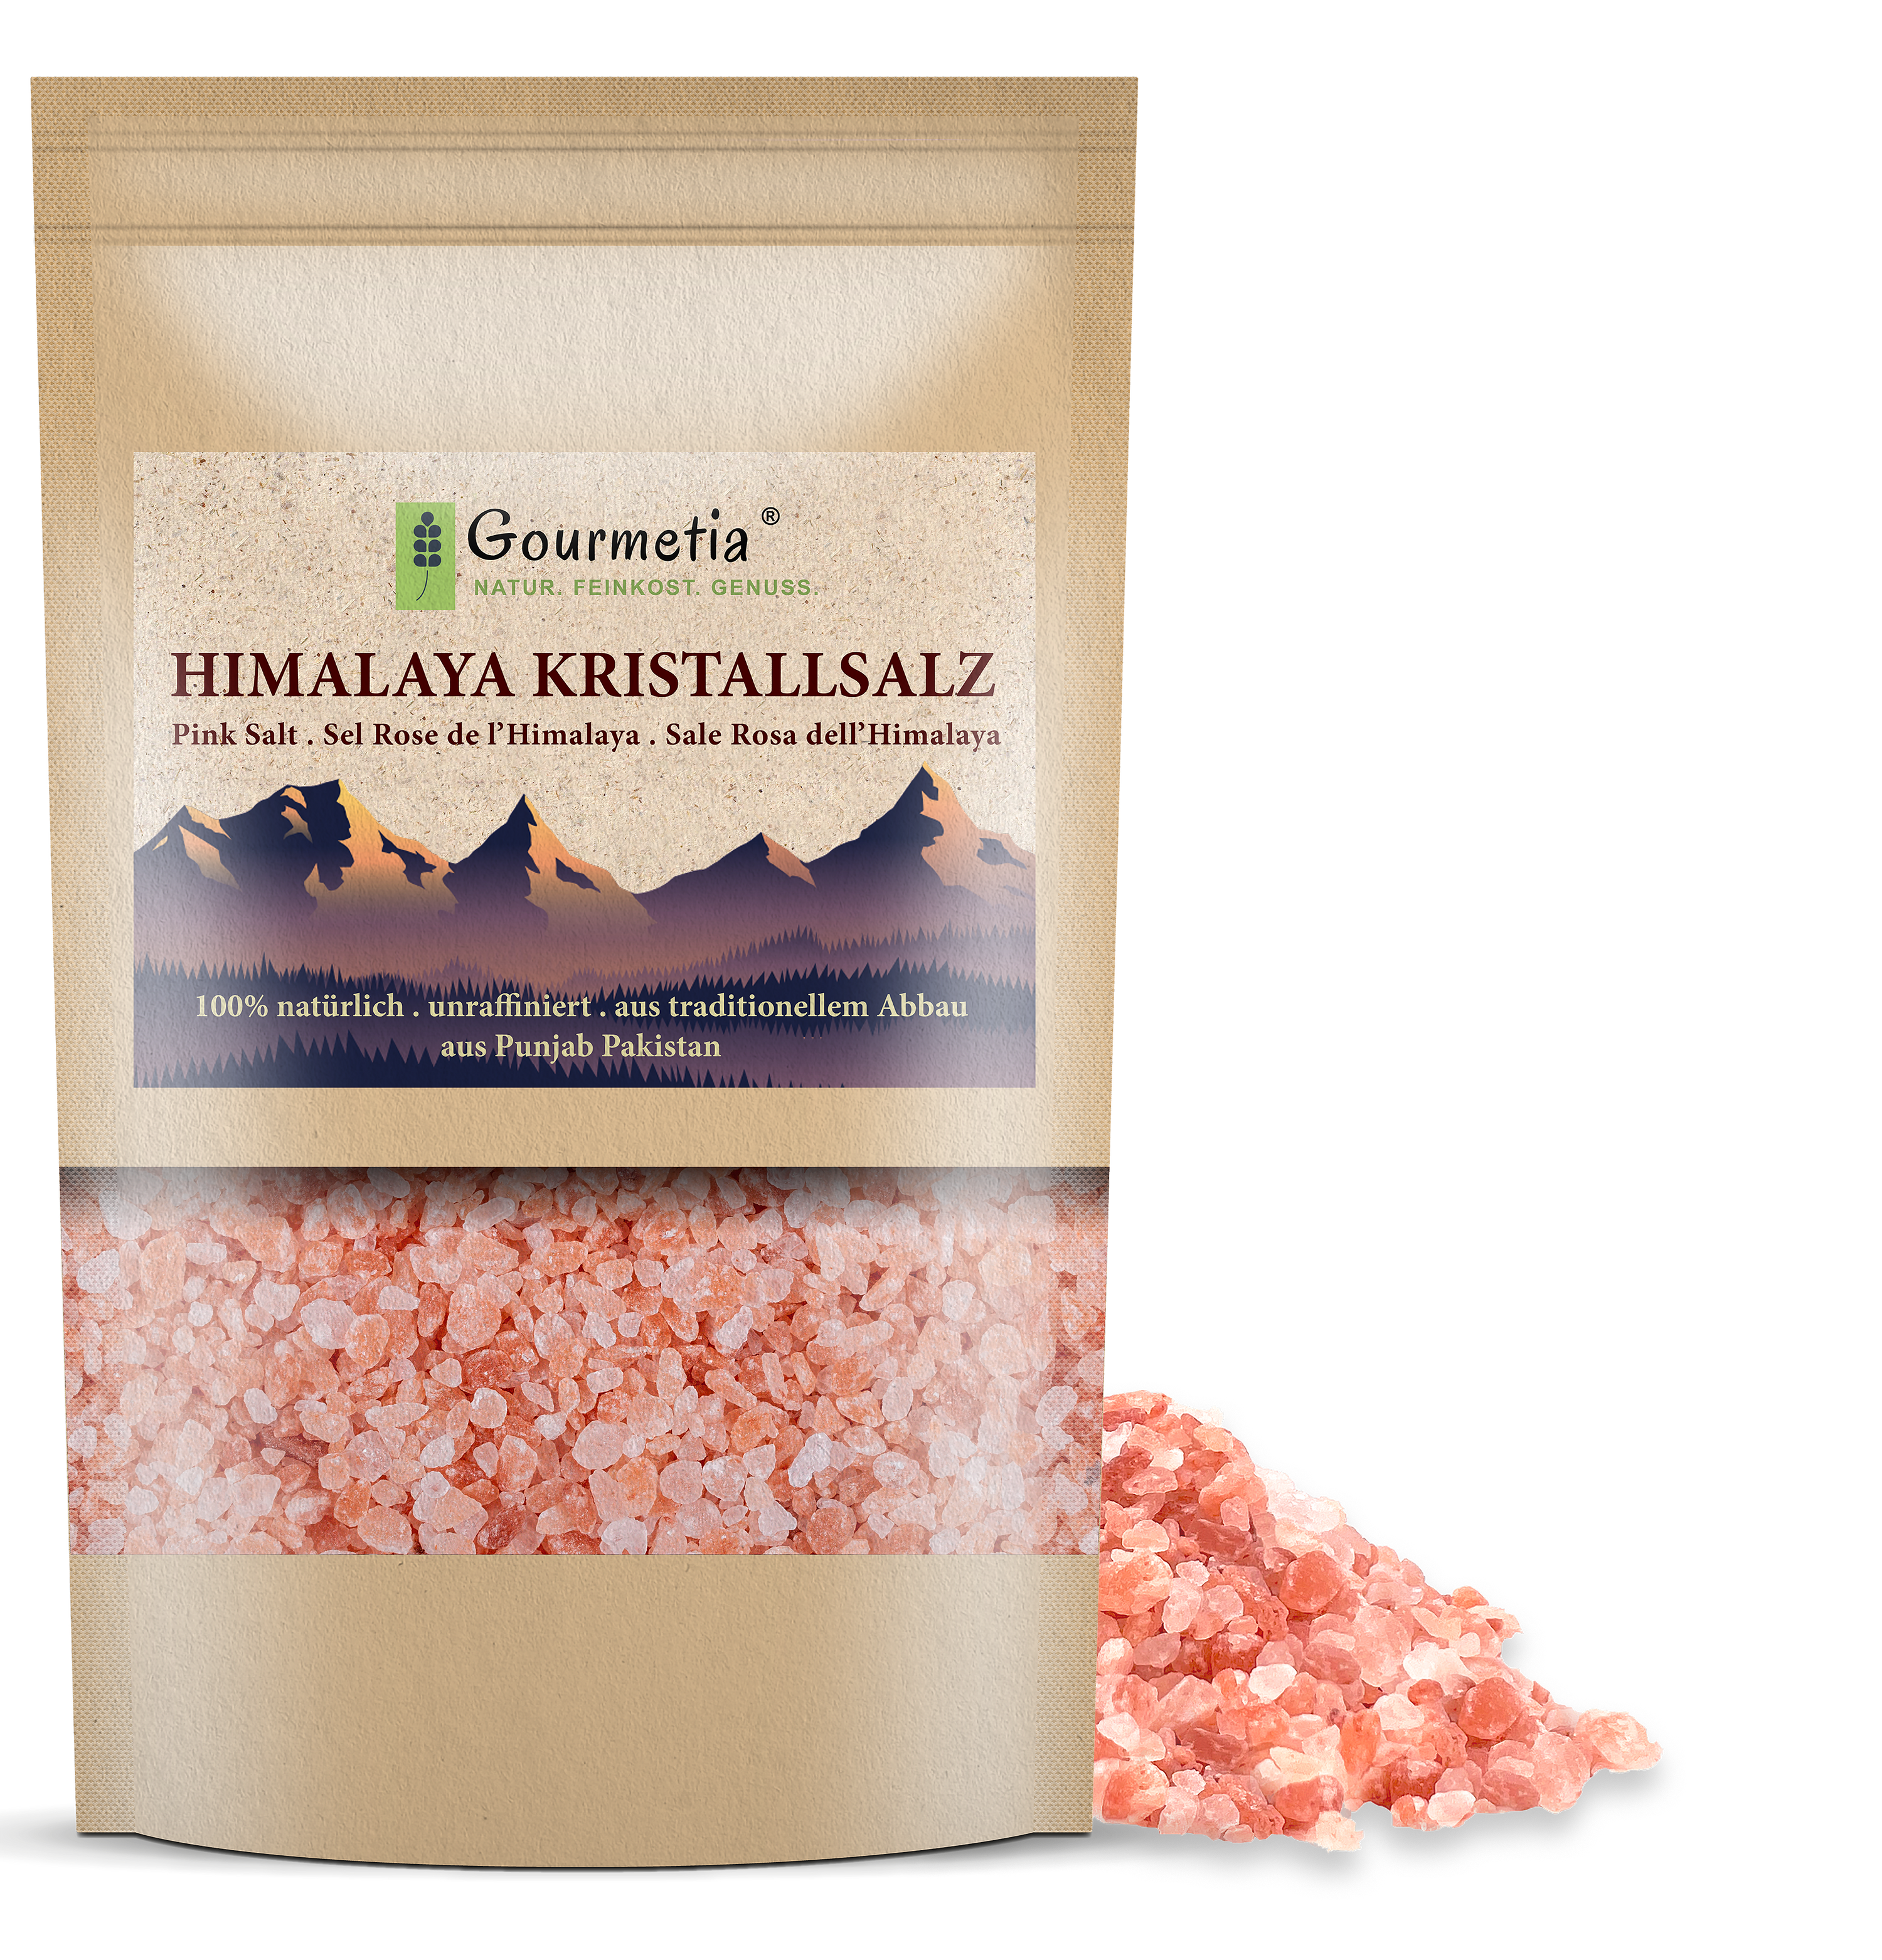 Himalayan salt, coarse